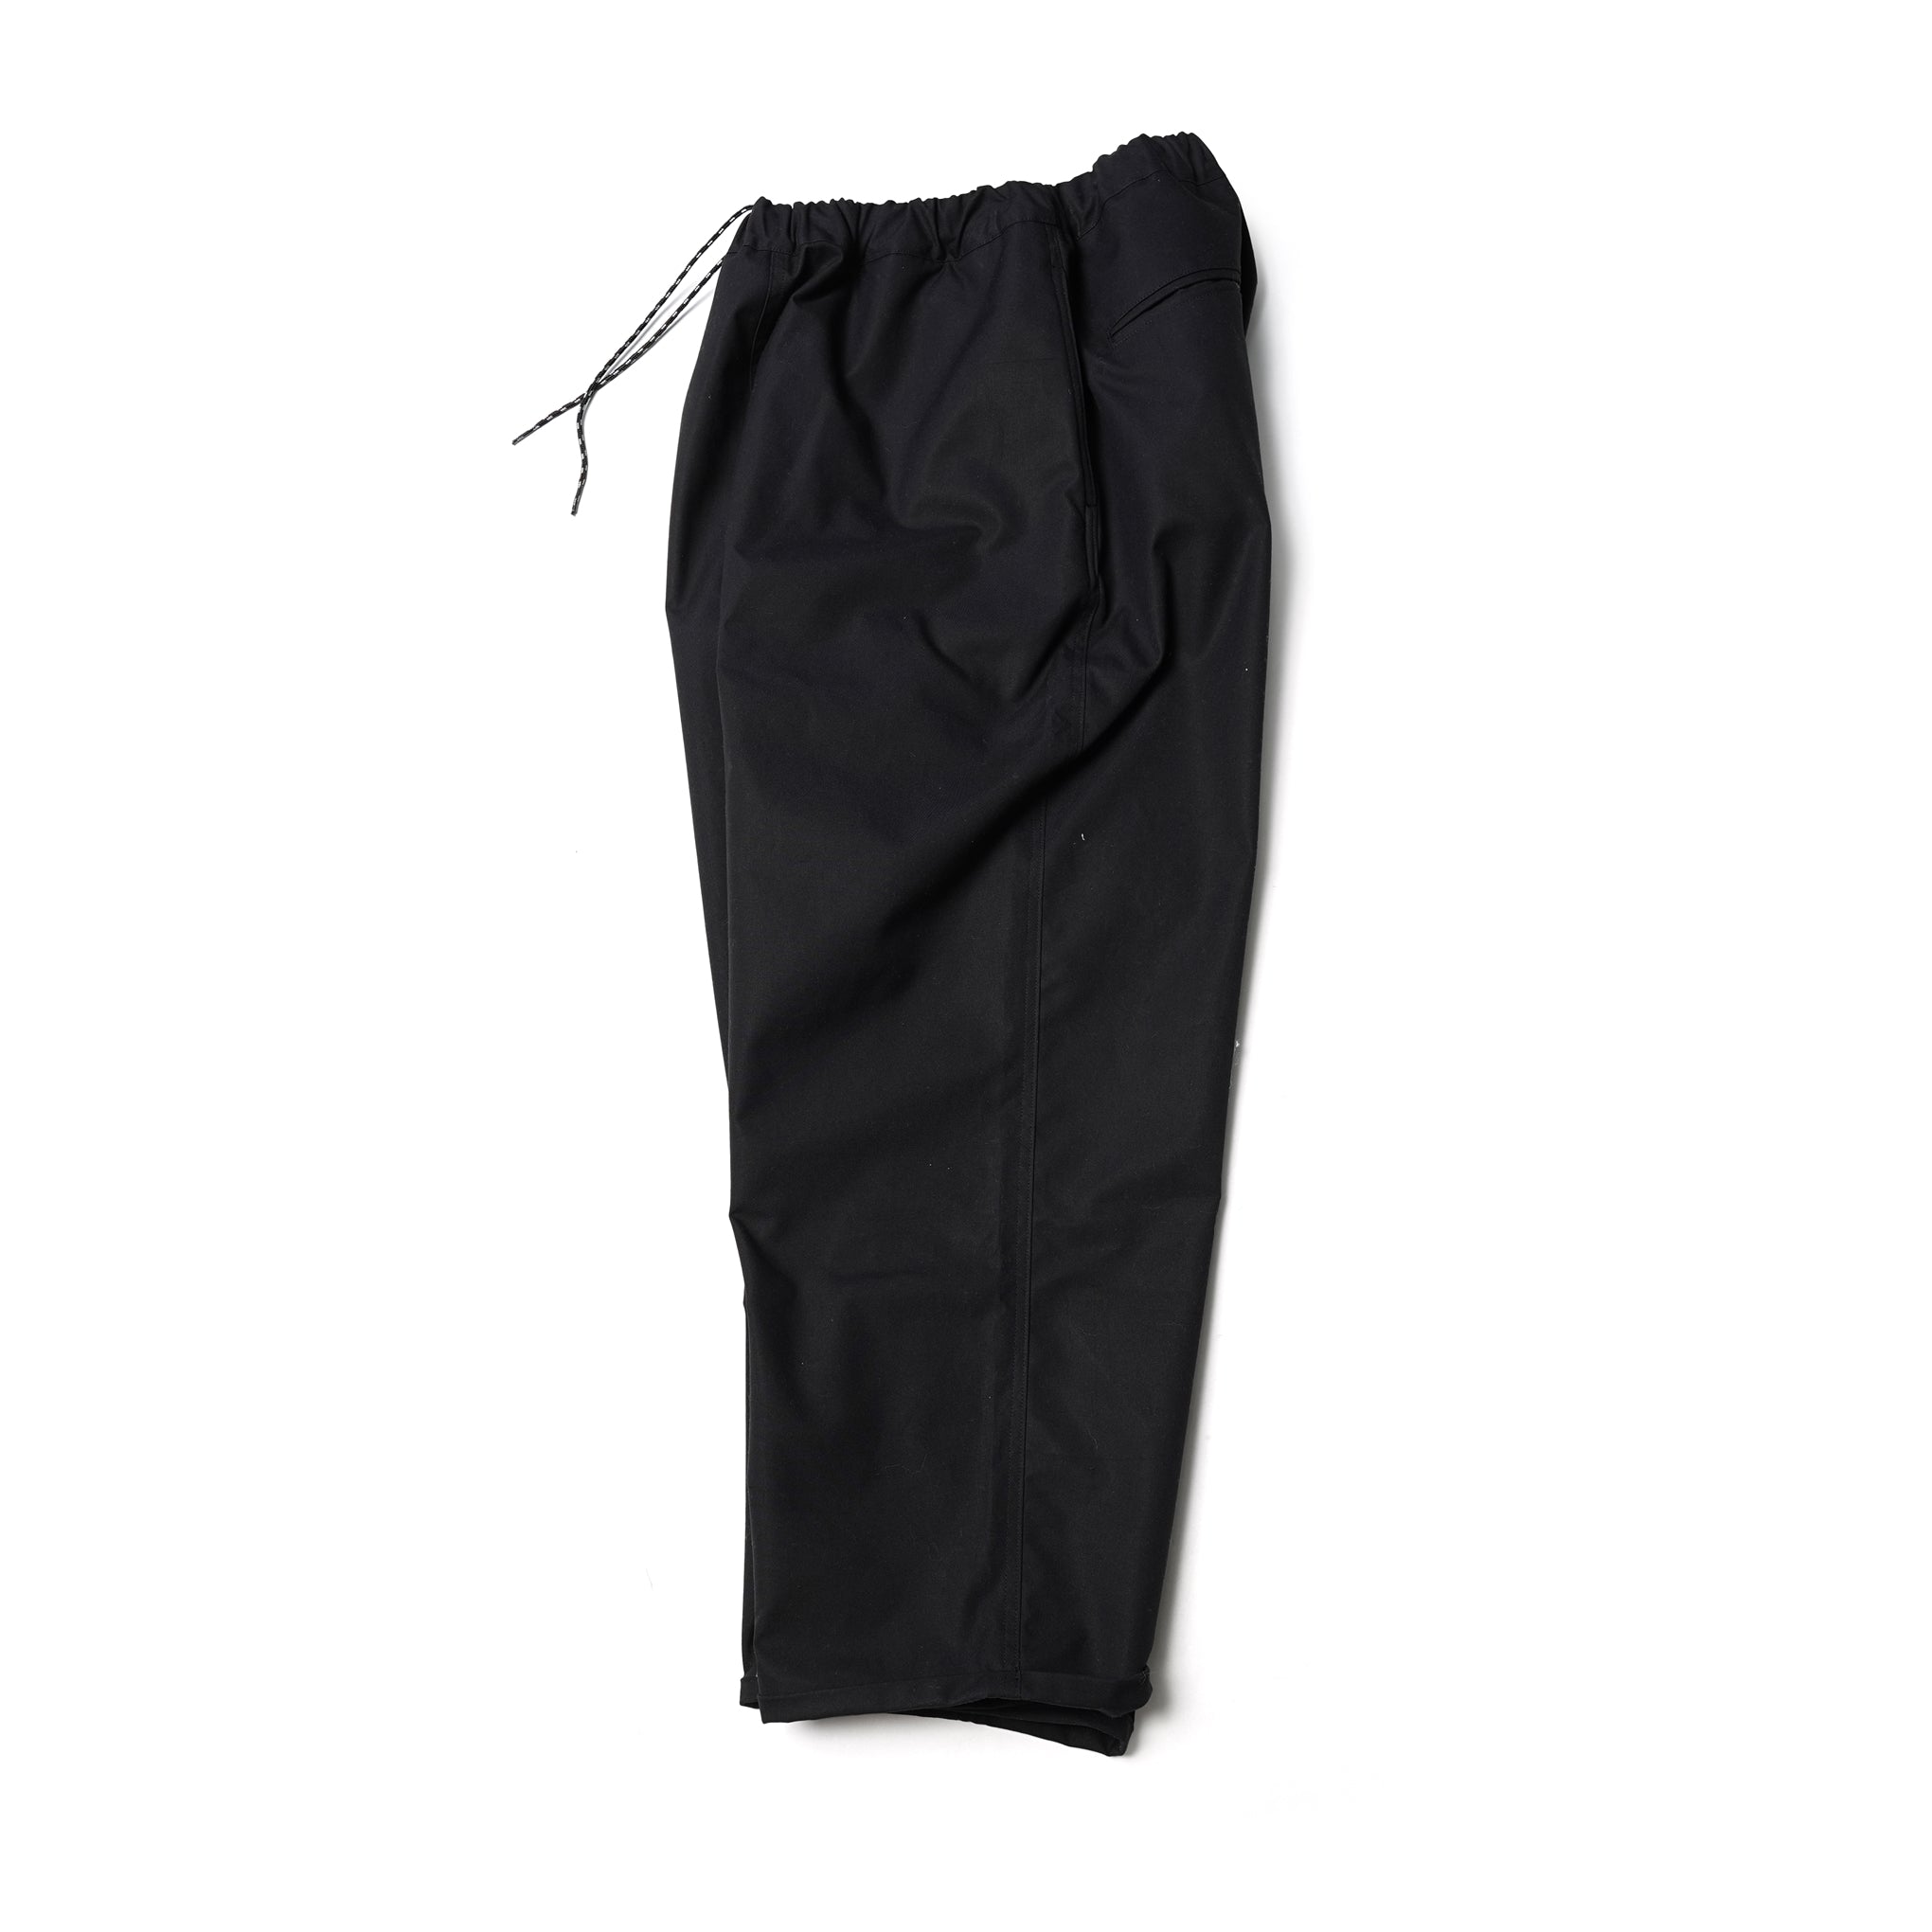 No:PH23FW-010 | Name:P.H. M. BM S.WAX CLOTH EASY PANTS | Color:Black【POWDERHORN MOUNTAINEERING_パウダーホーンマウンテニアリング】